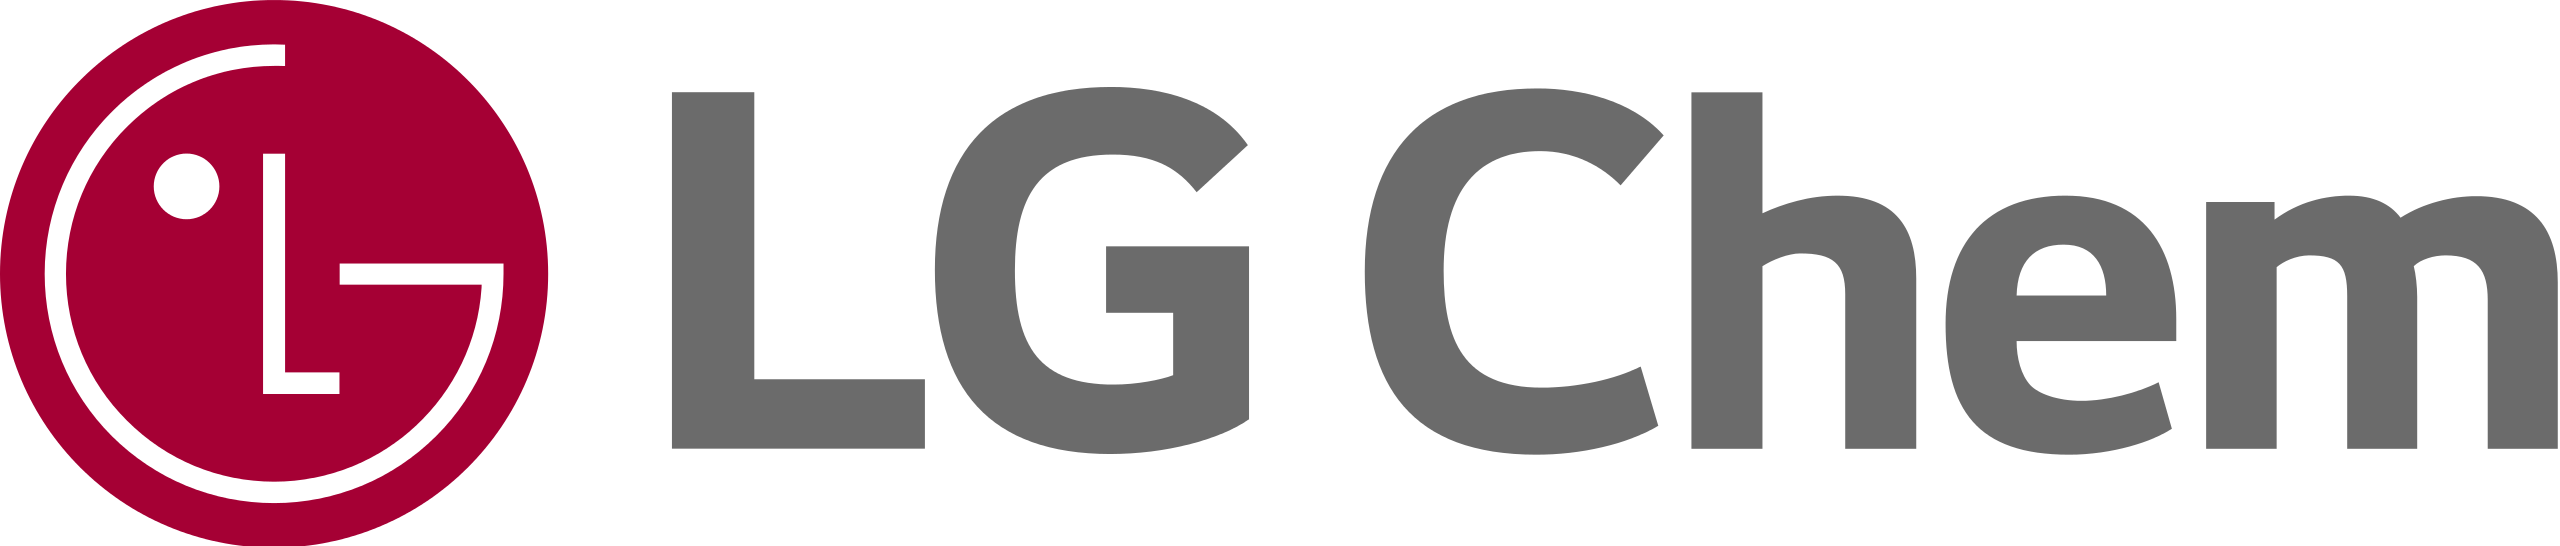 LG_Chem_logo_(english).svg